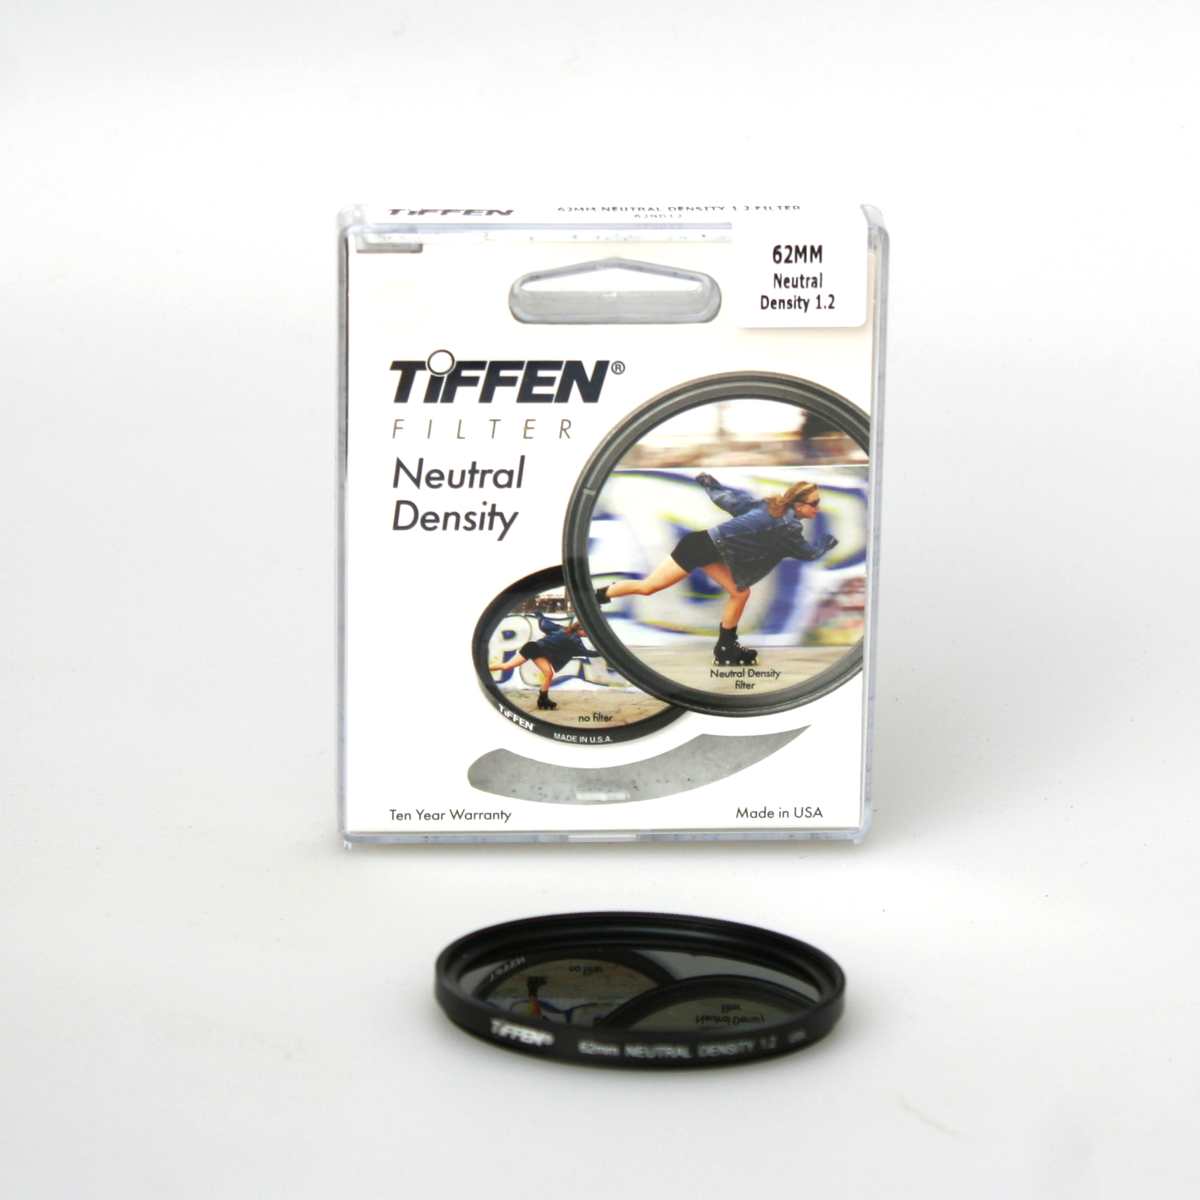 Tiffen 62MM NEUTRAL DENSITY 1.2 (4 Stop) Filter